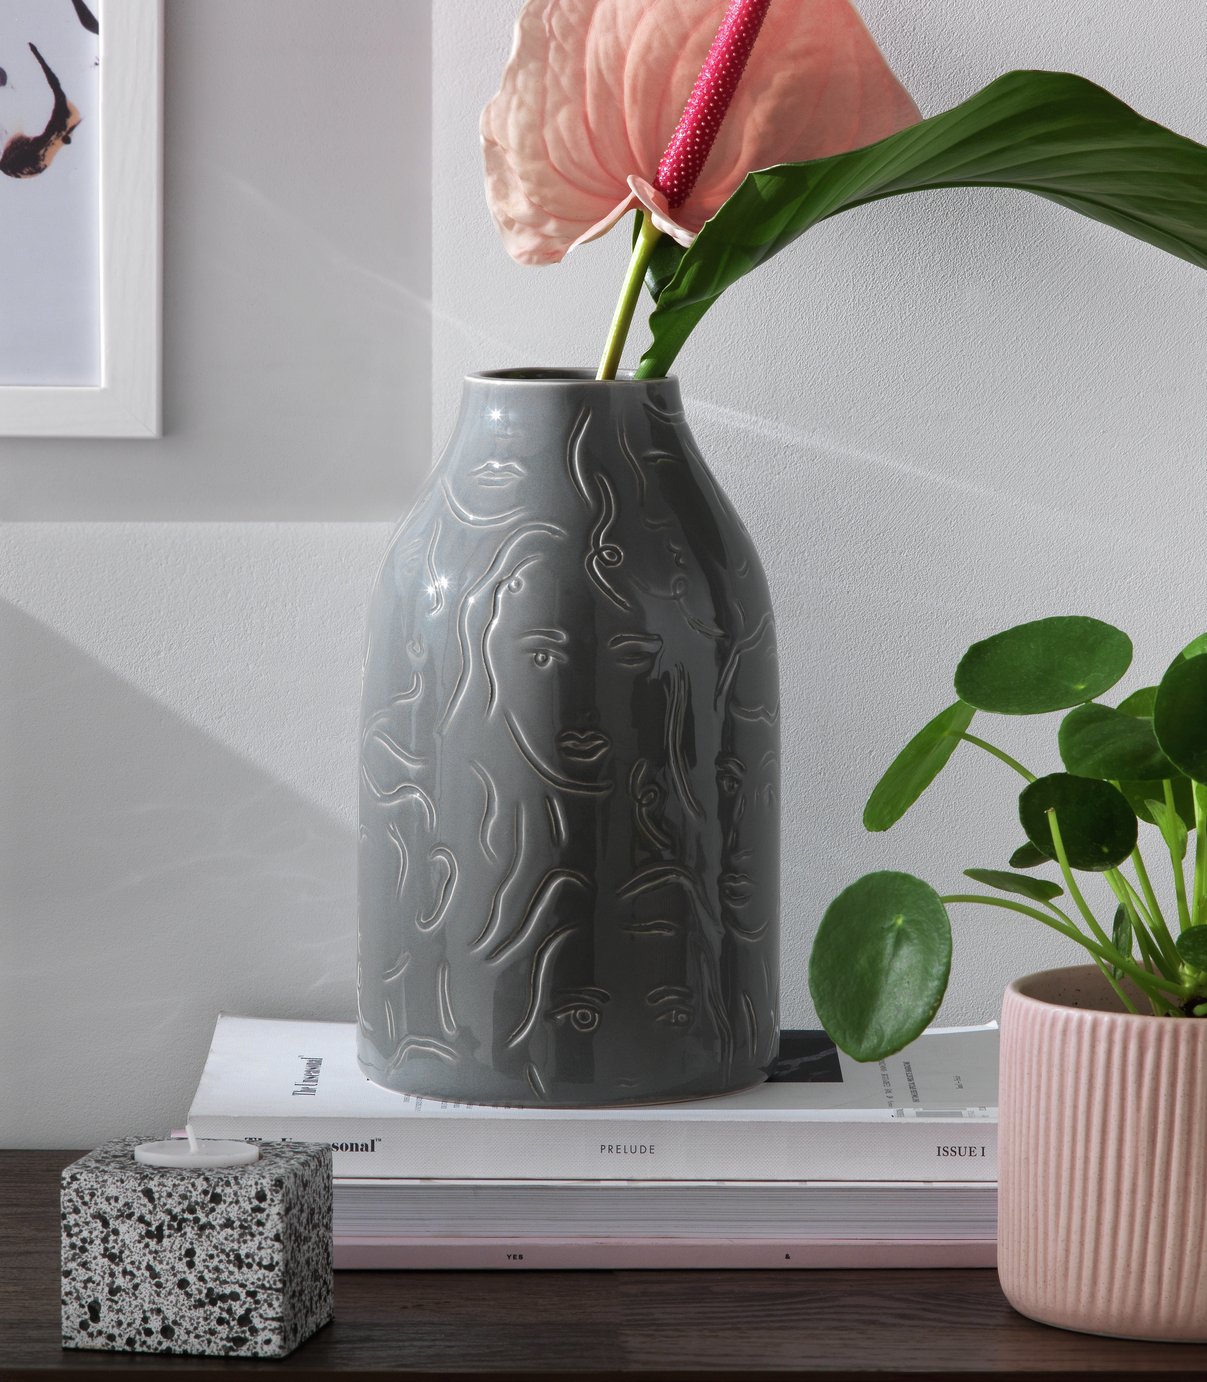 Argos Home Textured Face Vase Review